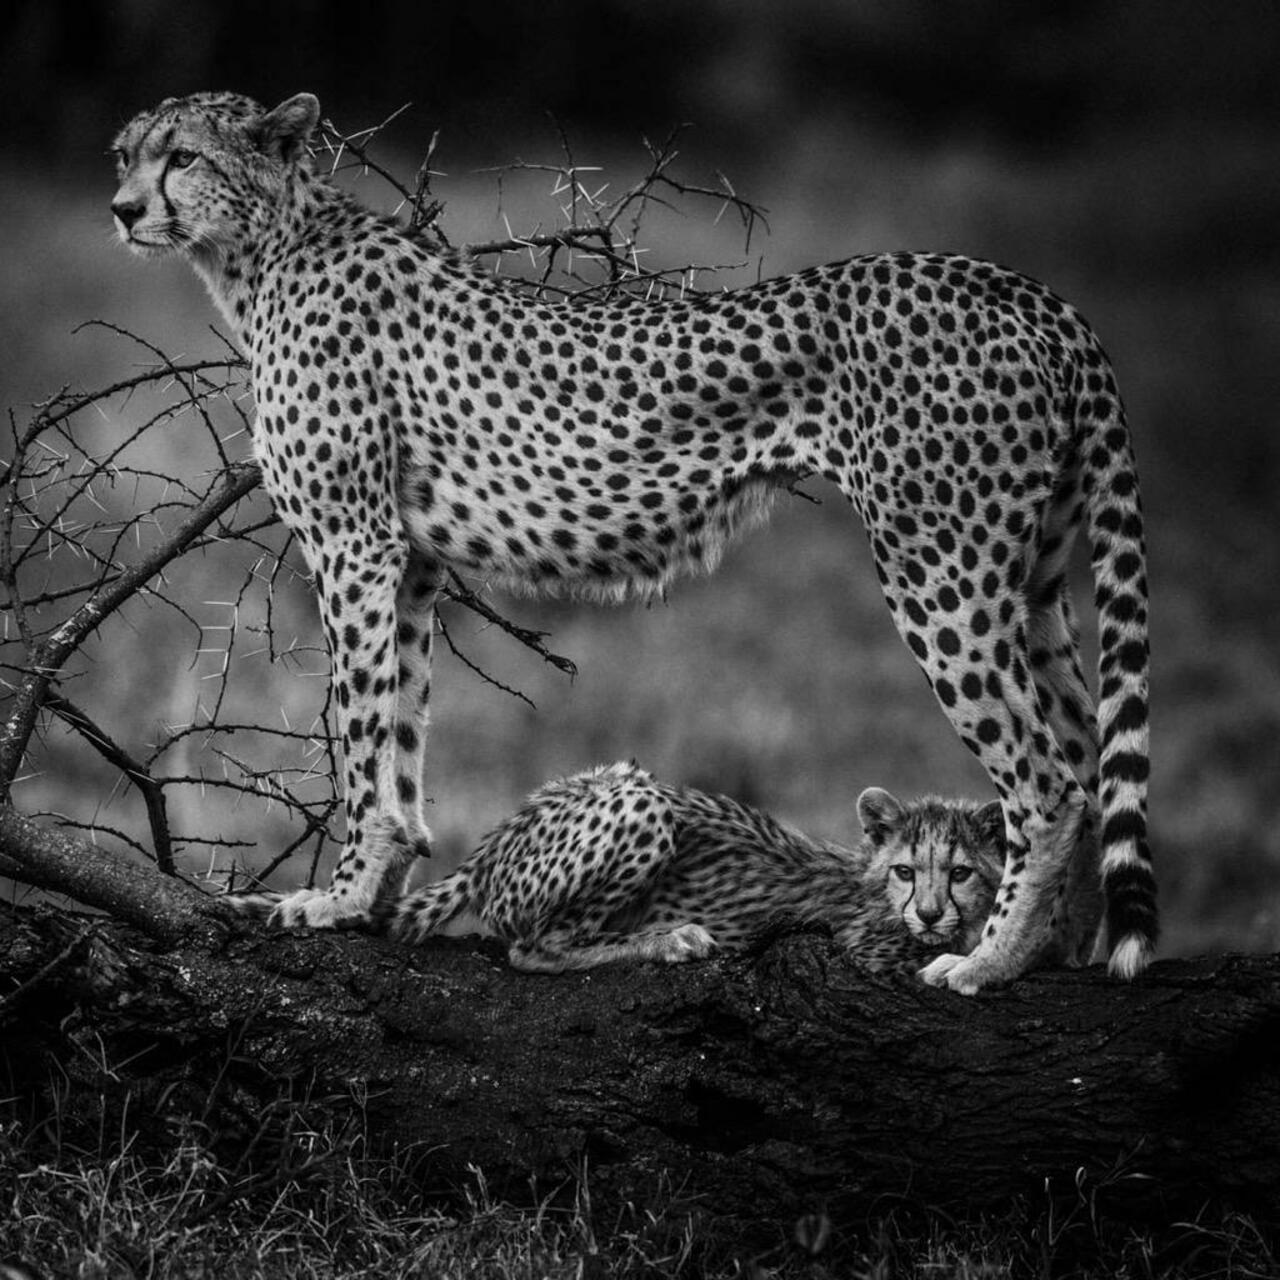 RT @Britanniacomms: Let's come together to save the cheetah http://laurentbaheux.com/blog  https://t.co/e4AjXFHonU c @laurentbaheux #nature #wildlife #photography